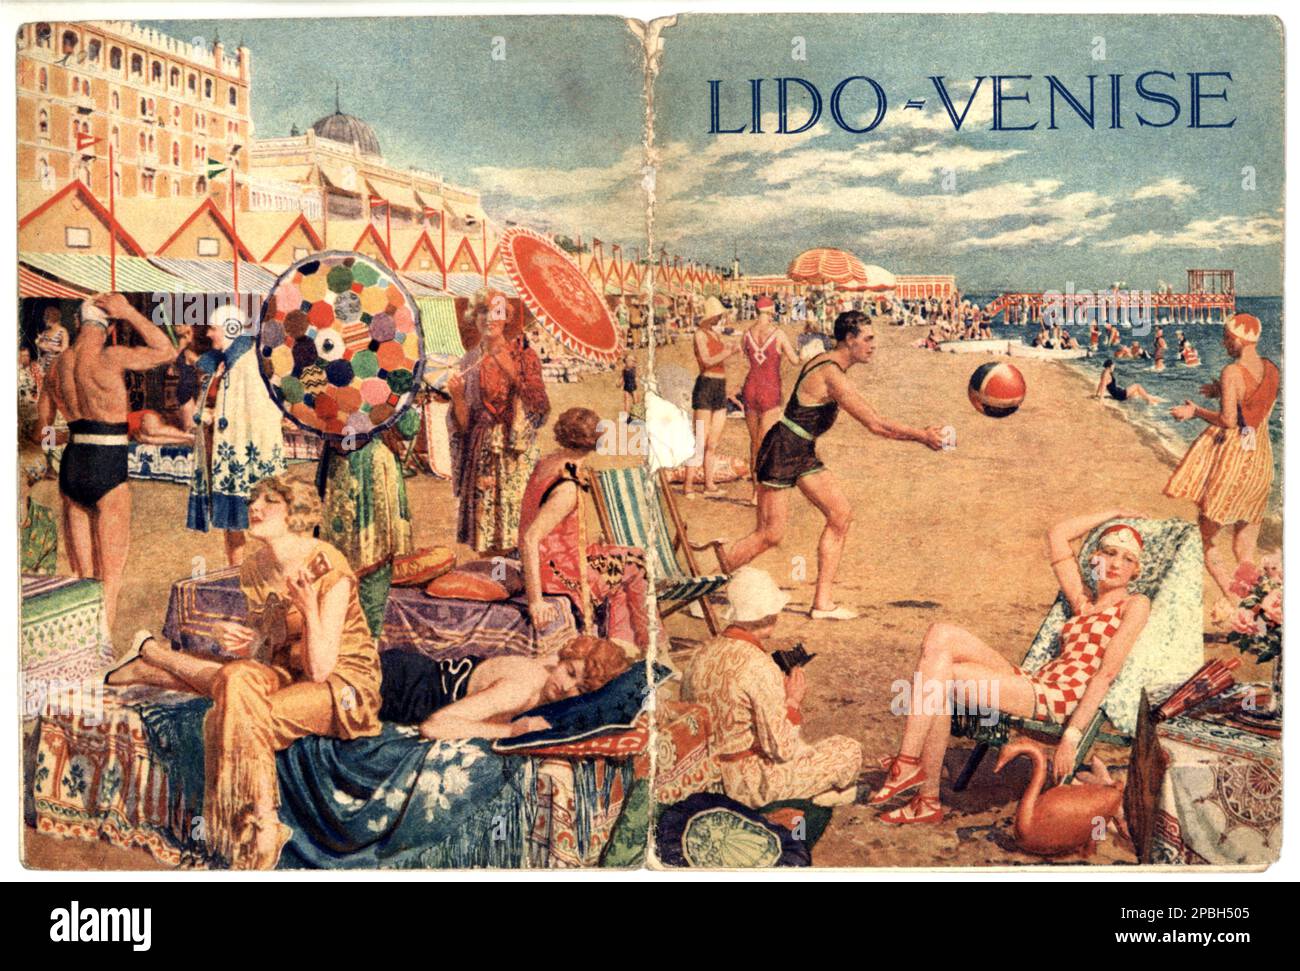 1927 , LIDO DI VENEZIA , ITALIEN : das Cover ( Kunstwerk des italienischen Illustrators FORTUNINO MATANIA ) eines Werbe-Tourismusmagazins am Strand LIDO DI VENEZIA . In dieser Abbildung ist der Strand DES HOTELS EXCELSIOR - pubblicita' - VENEDIG - ITALIA - FOTOSTORICHE - GESCHICHTE - GEOGRAFIA - GEOGRAFIE - Laguna - VENETO - - ARTE - KUNST - Illustratore - Copertina - spiaggia - Kostüm da Bagno - Badeanzug - Bagnanti - TURISMO - TURISTA - TURISTI - Plage - TOURISMUS - TOURIST - ART DECO - Ombrello da Sole - Sonnenschirm - Archivio GBB Stockfoto